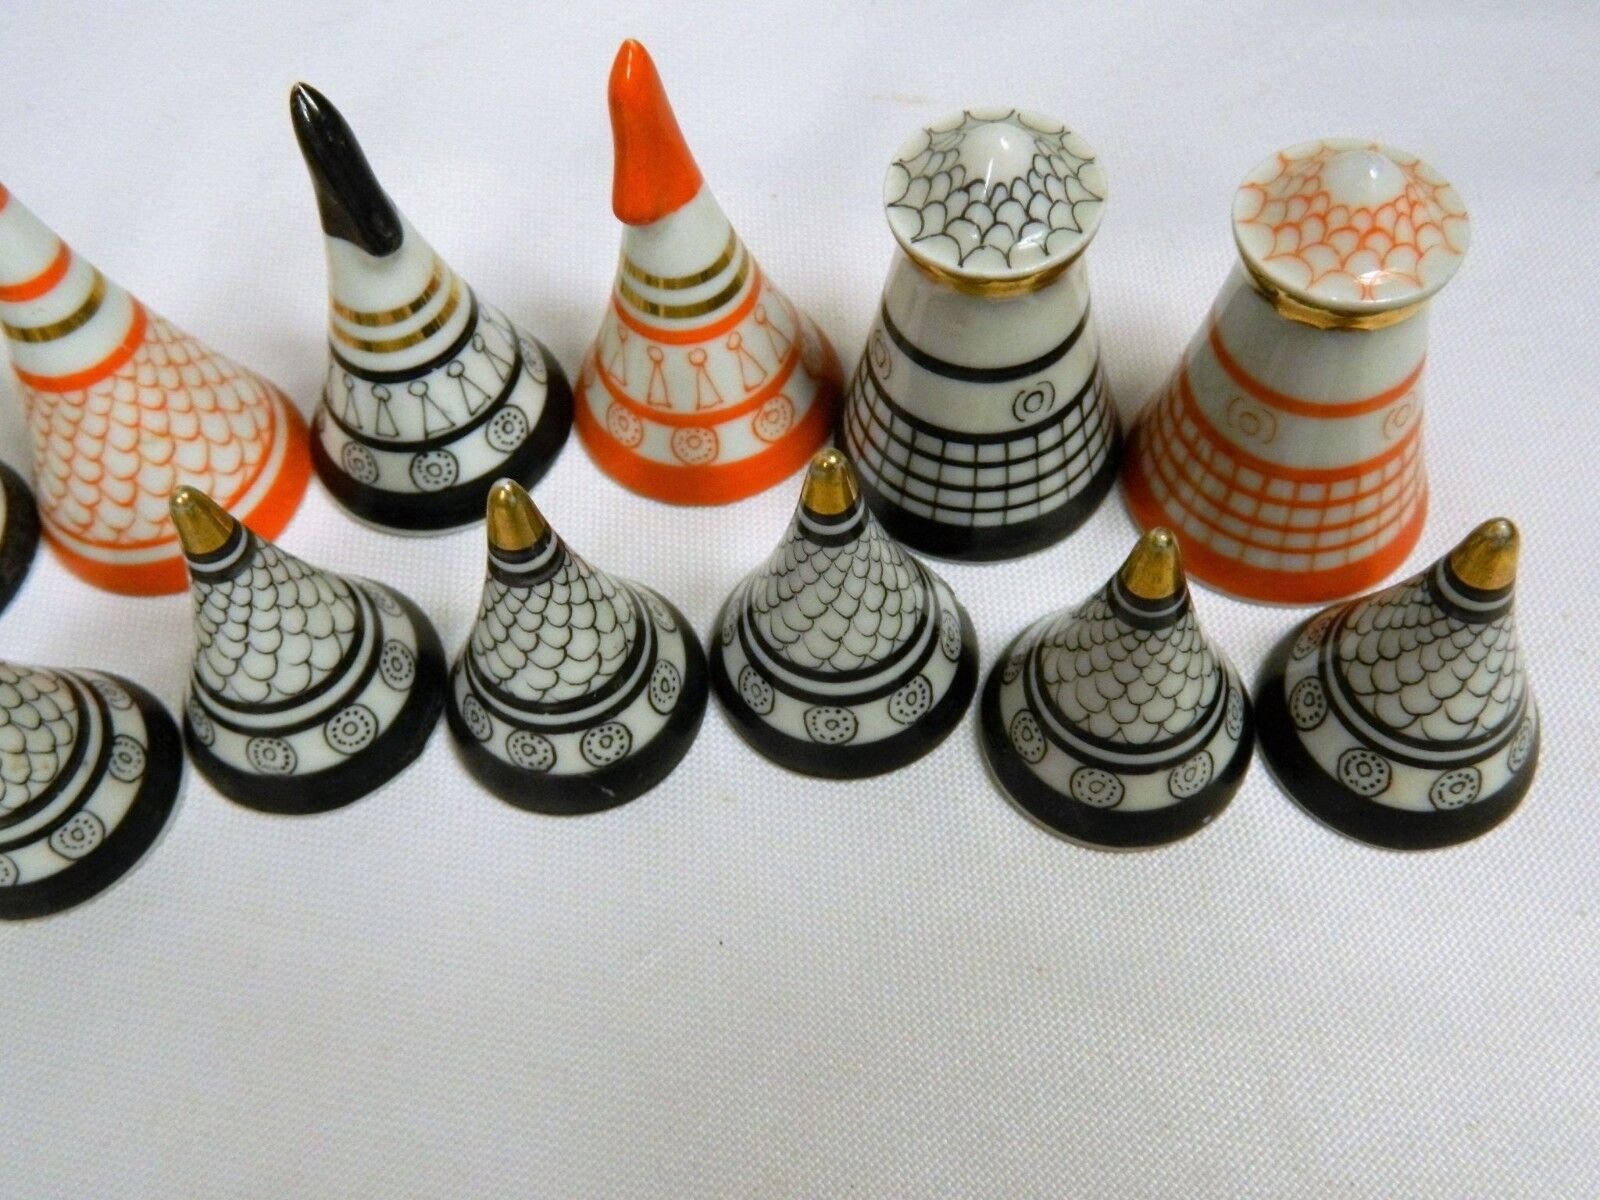 11910.Unique Russian Ukrainian Porcelain Chess Pieces. Baranovka. 1970s